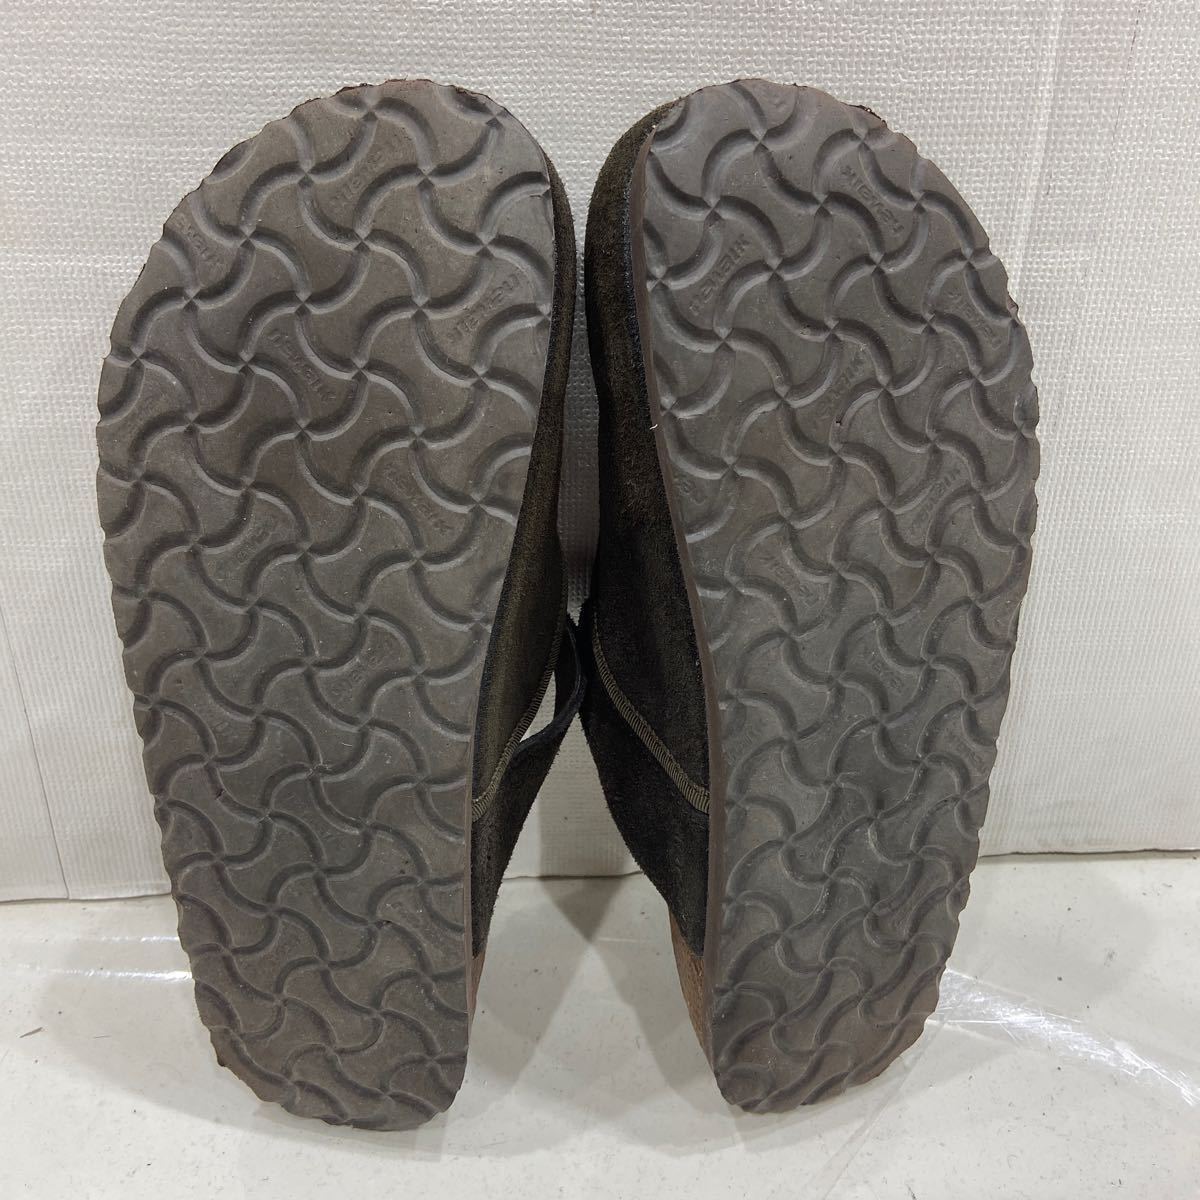 [BIRKENSTOCK Birkenstock ]newalk sandals 39 dark brown suede leather Boston new walk montana2401oki